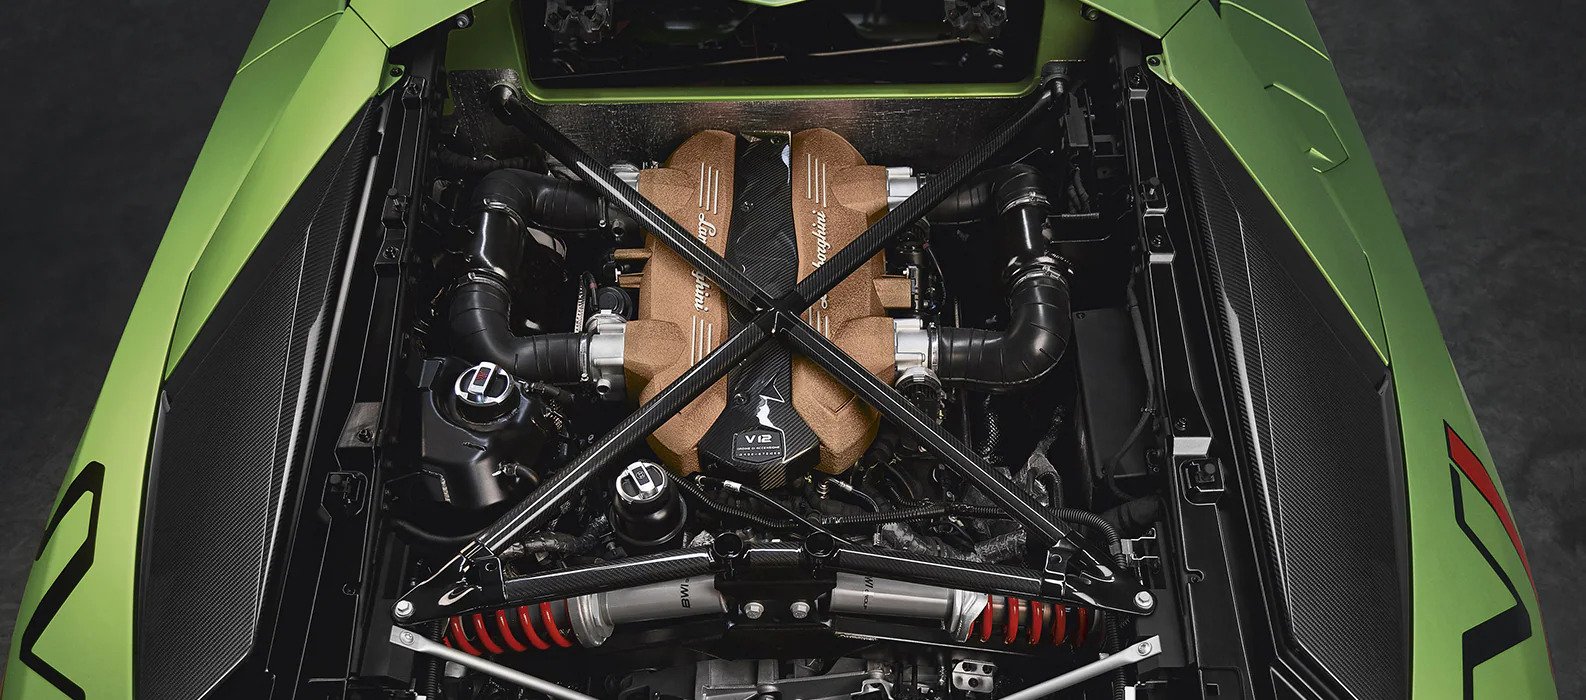 The world's most powerful V12 engines in 2023 - Lamborghini Aventador SVJ;s 6.5-liter V12 via Lamborghini.